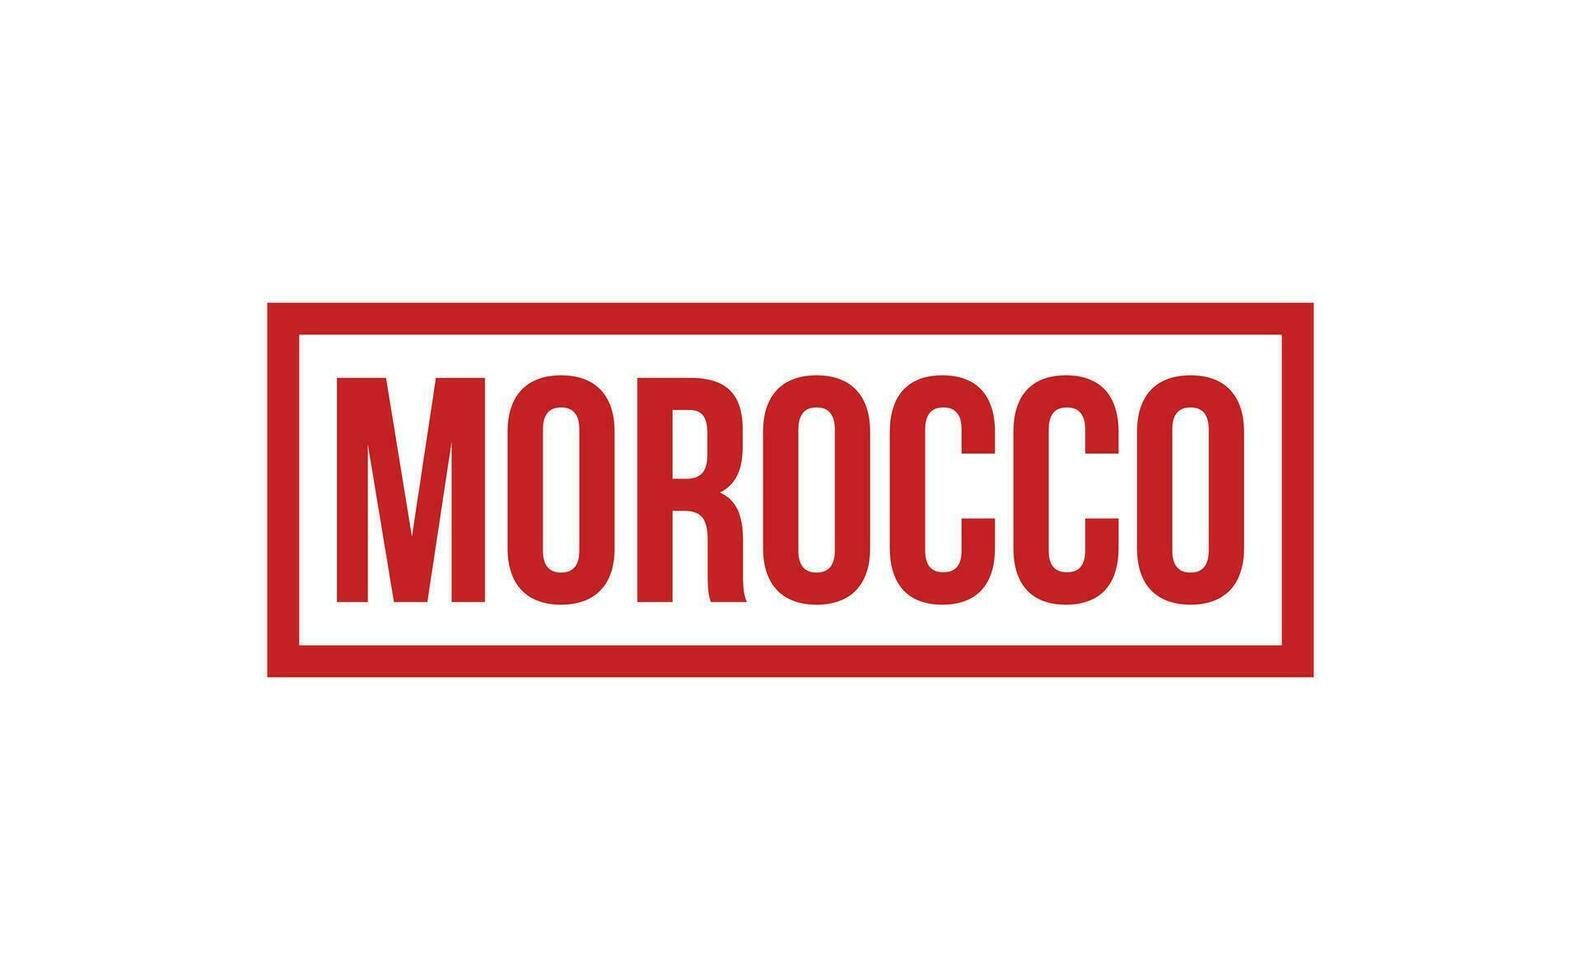 Marokko Gummi Briefmarke Siegel Vektor